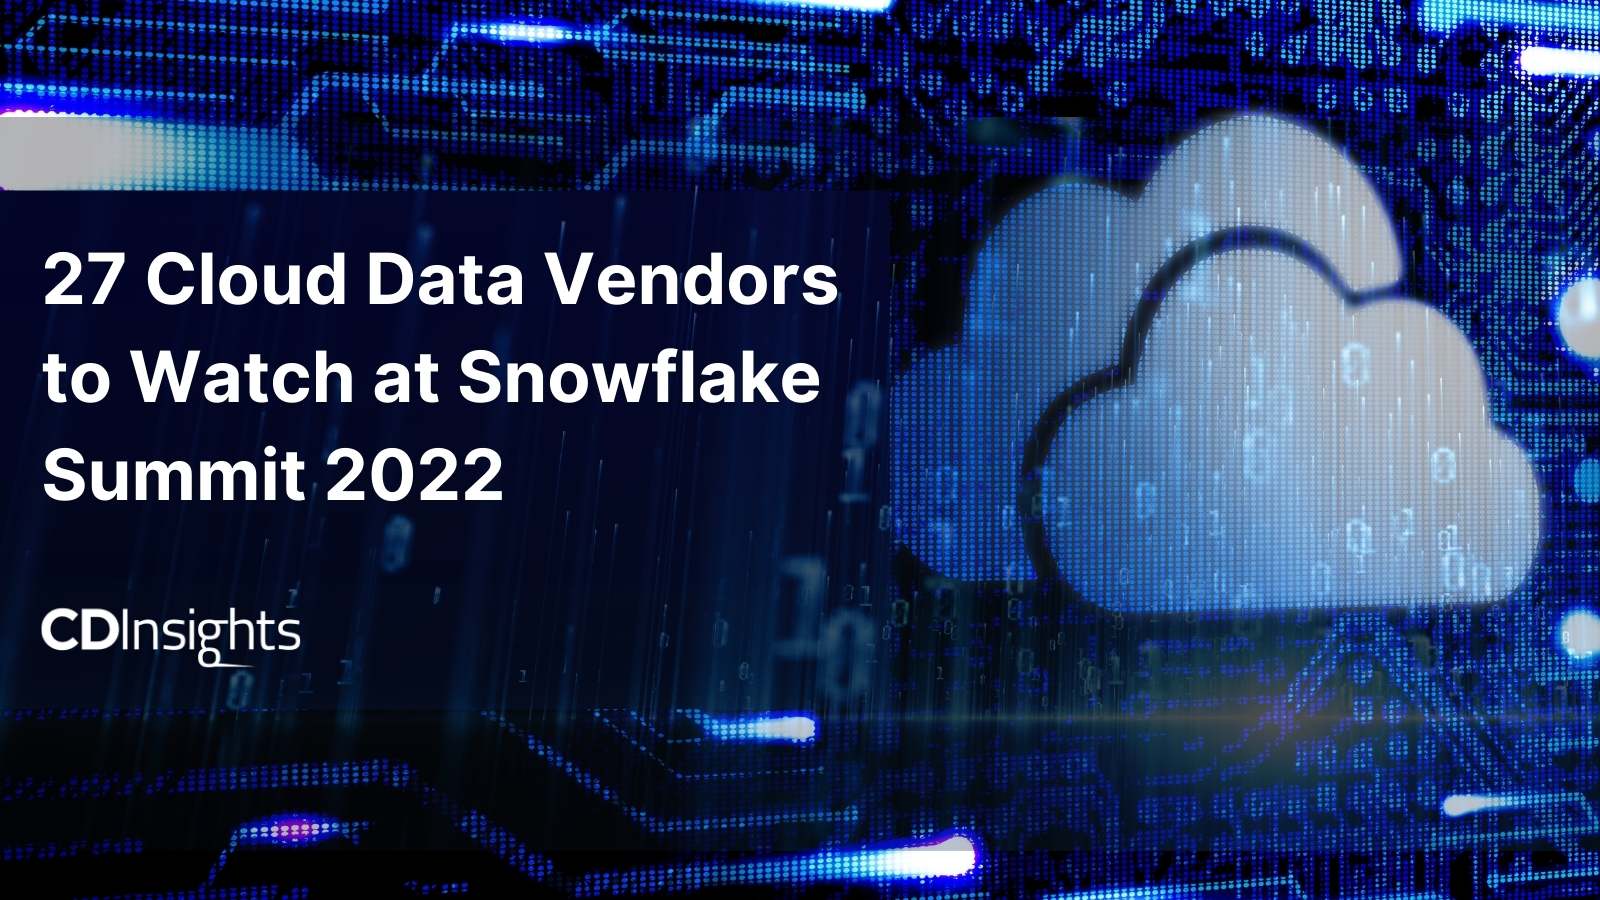 27 Cloud Data Vendors to Watch at Snowflake Summit 2022 CDInsights